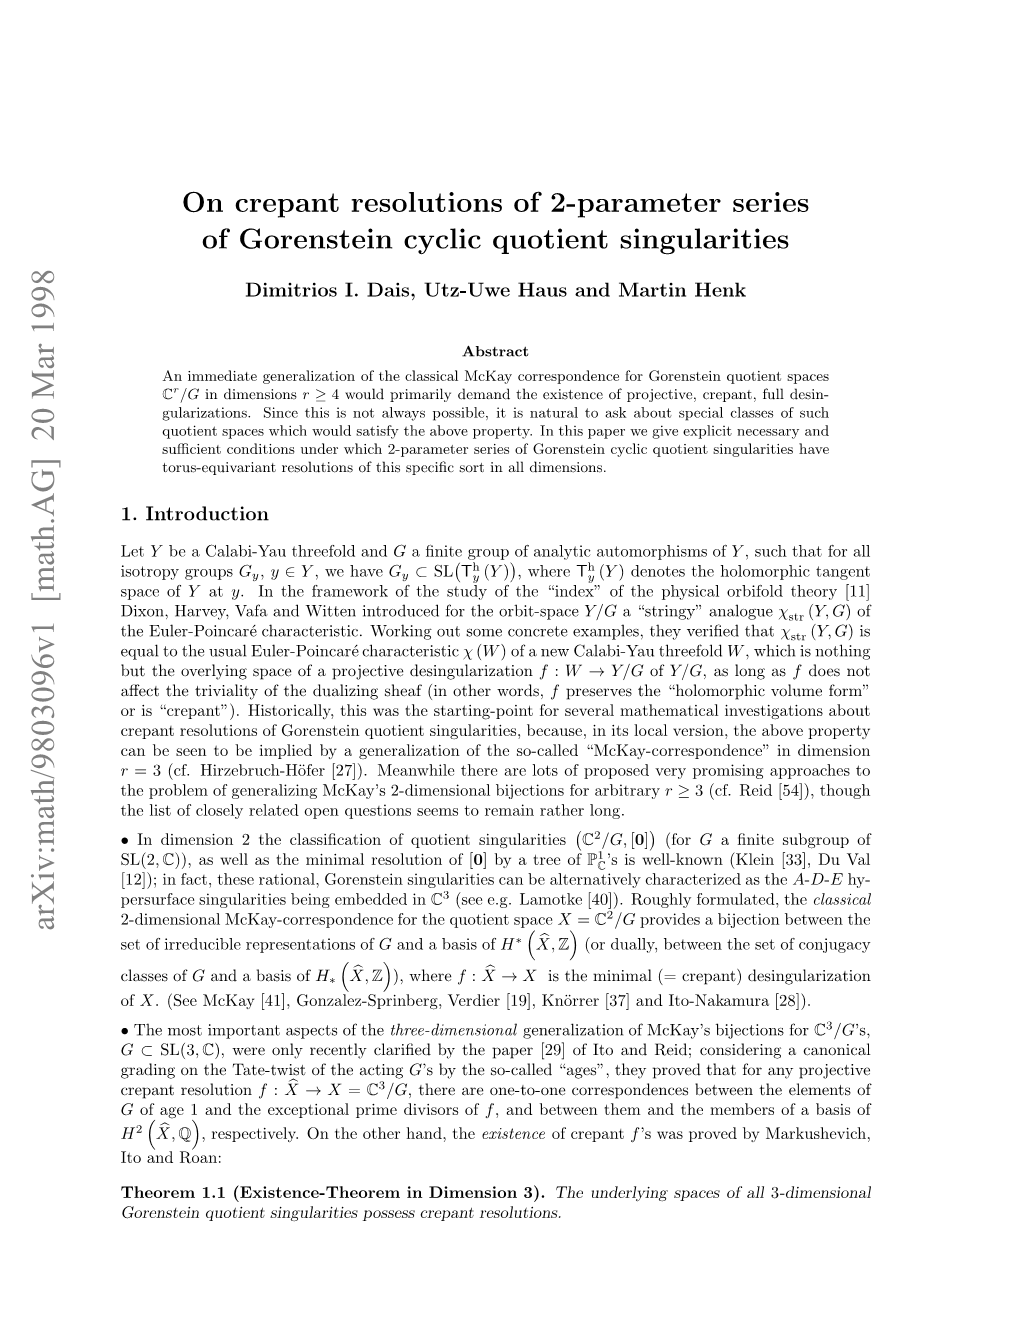 On Crepant Resolutions of 2-Parameter Series of Gorenstein Cyclic Quotient Singularities